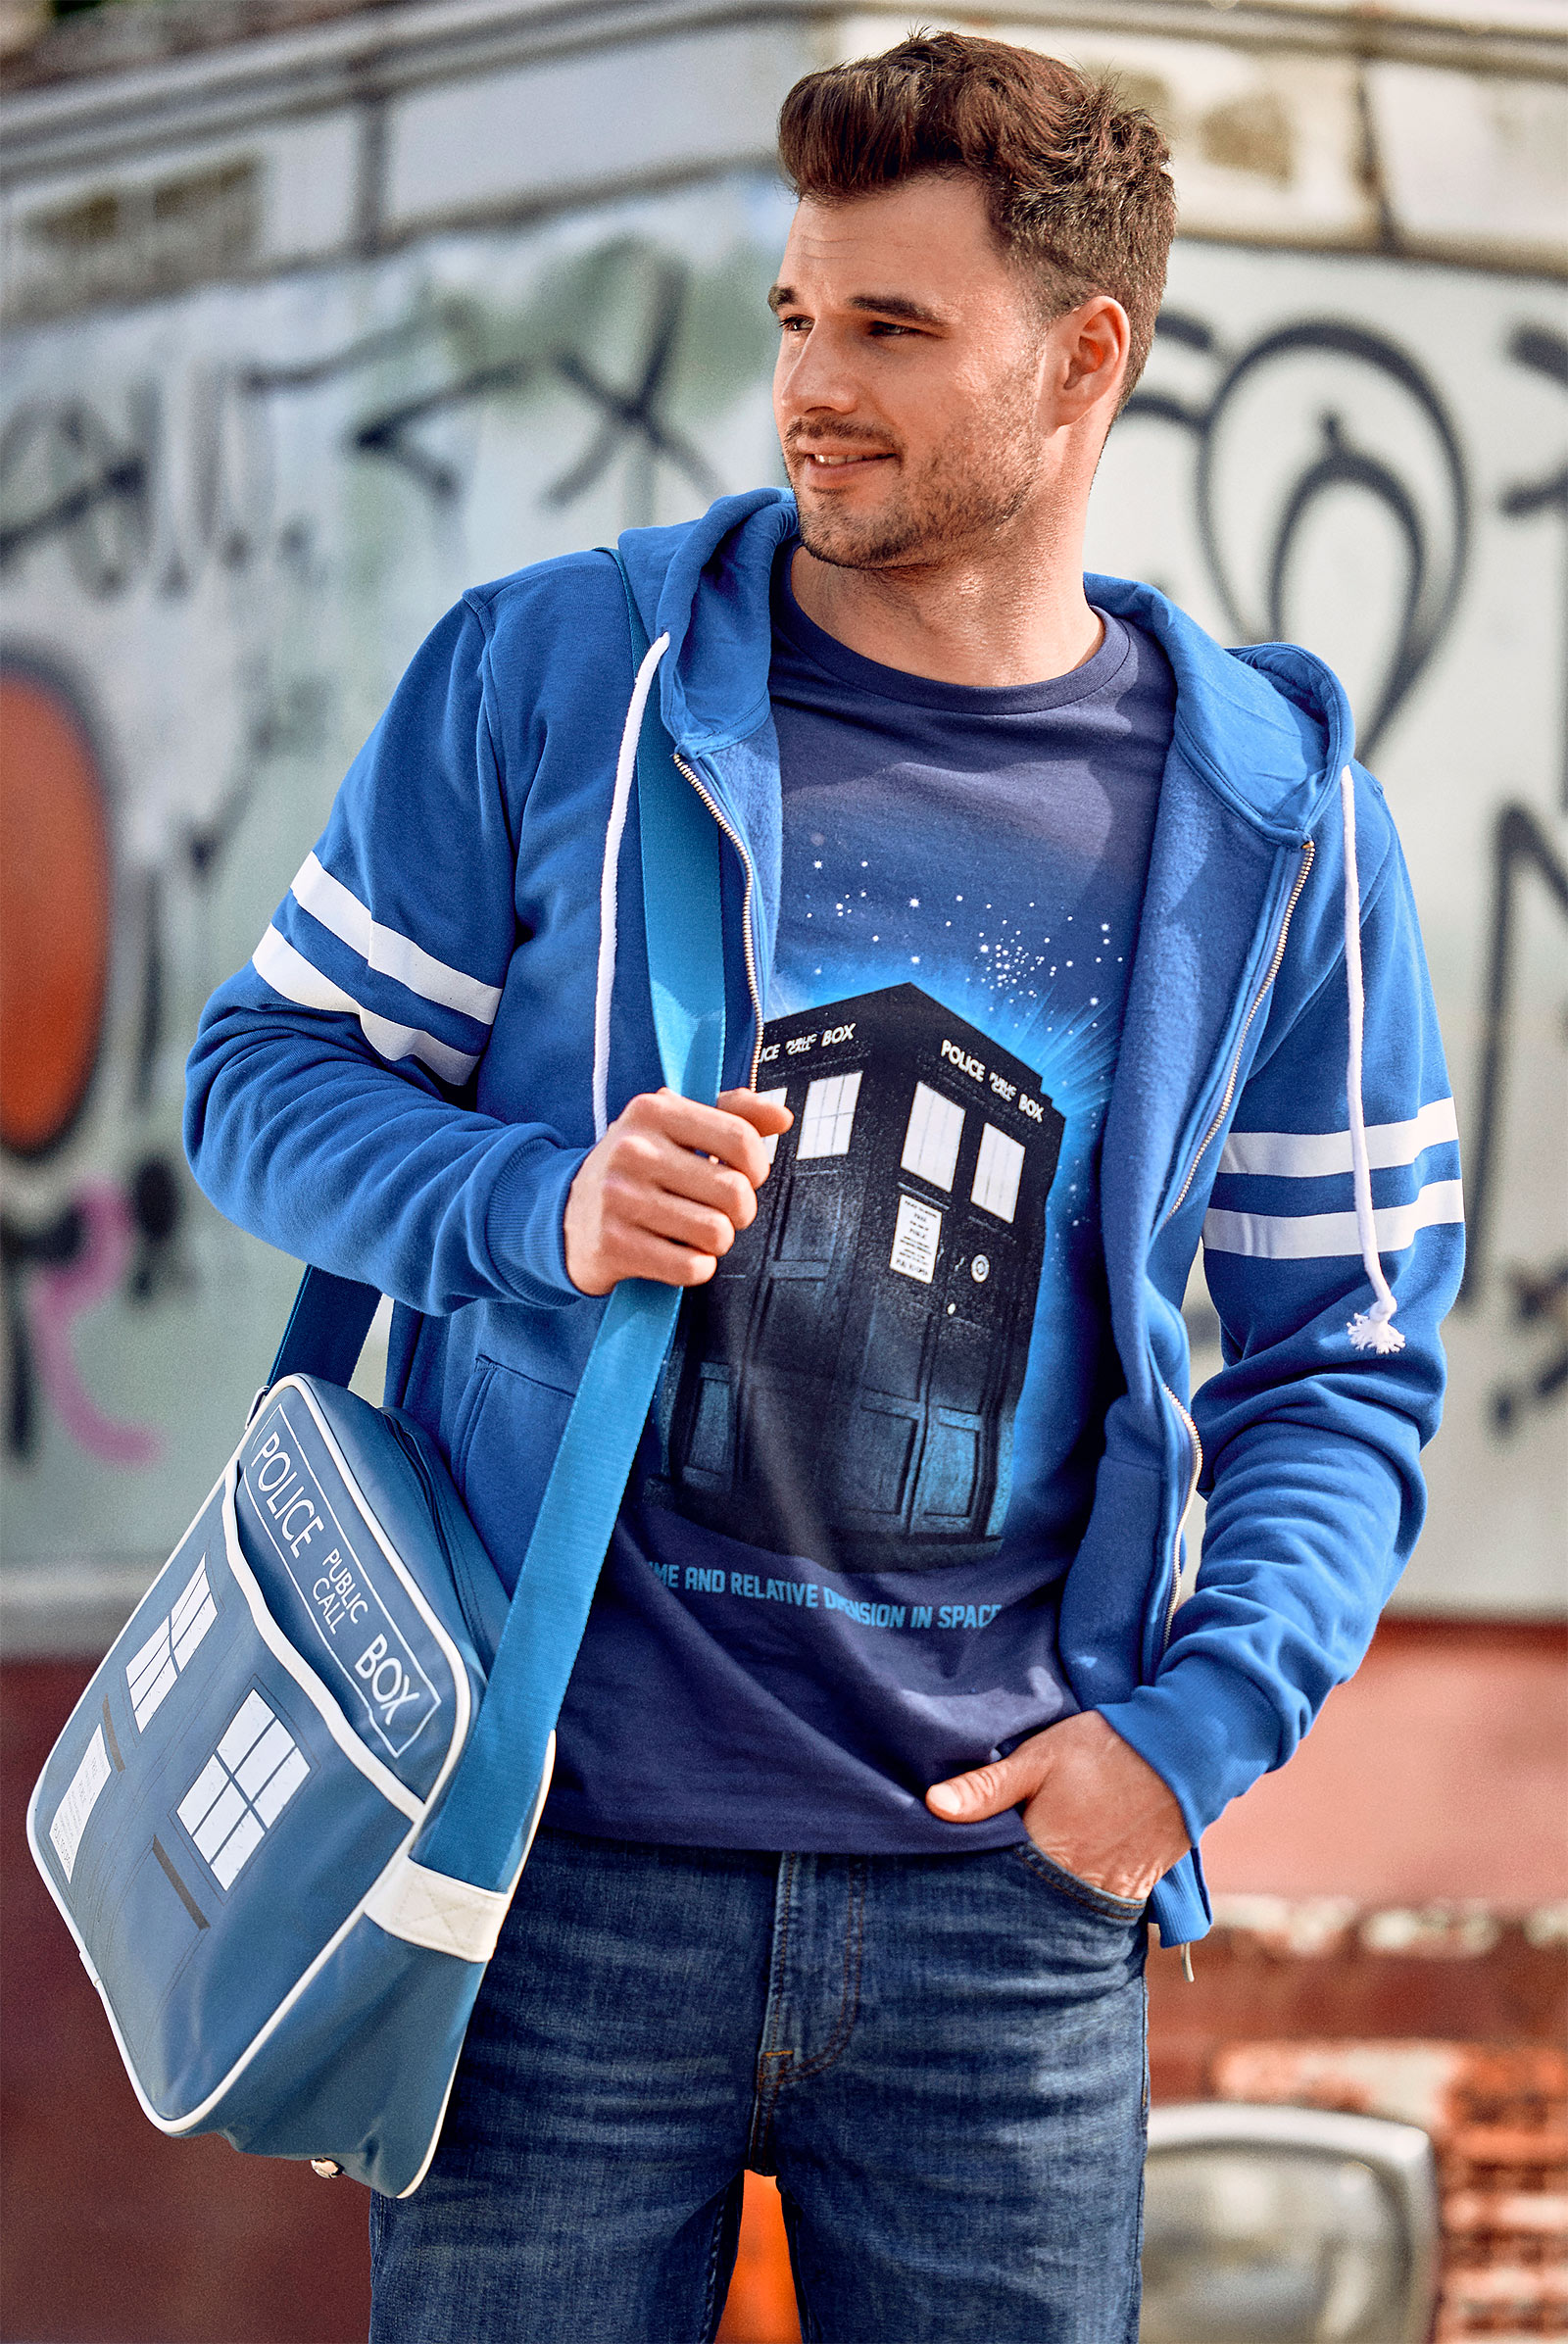 Doctor Who - Tardis Space T-Shirt blau